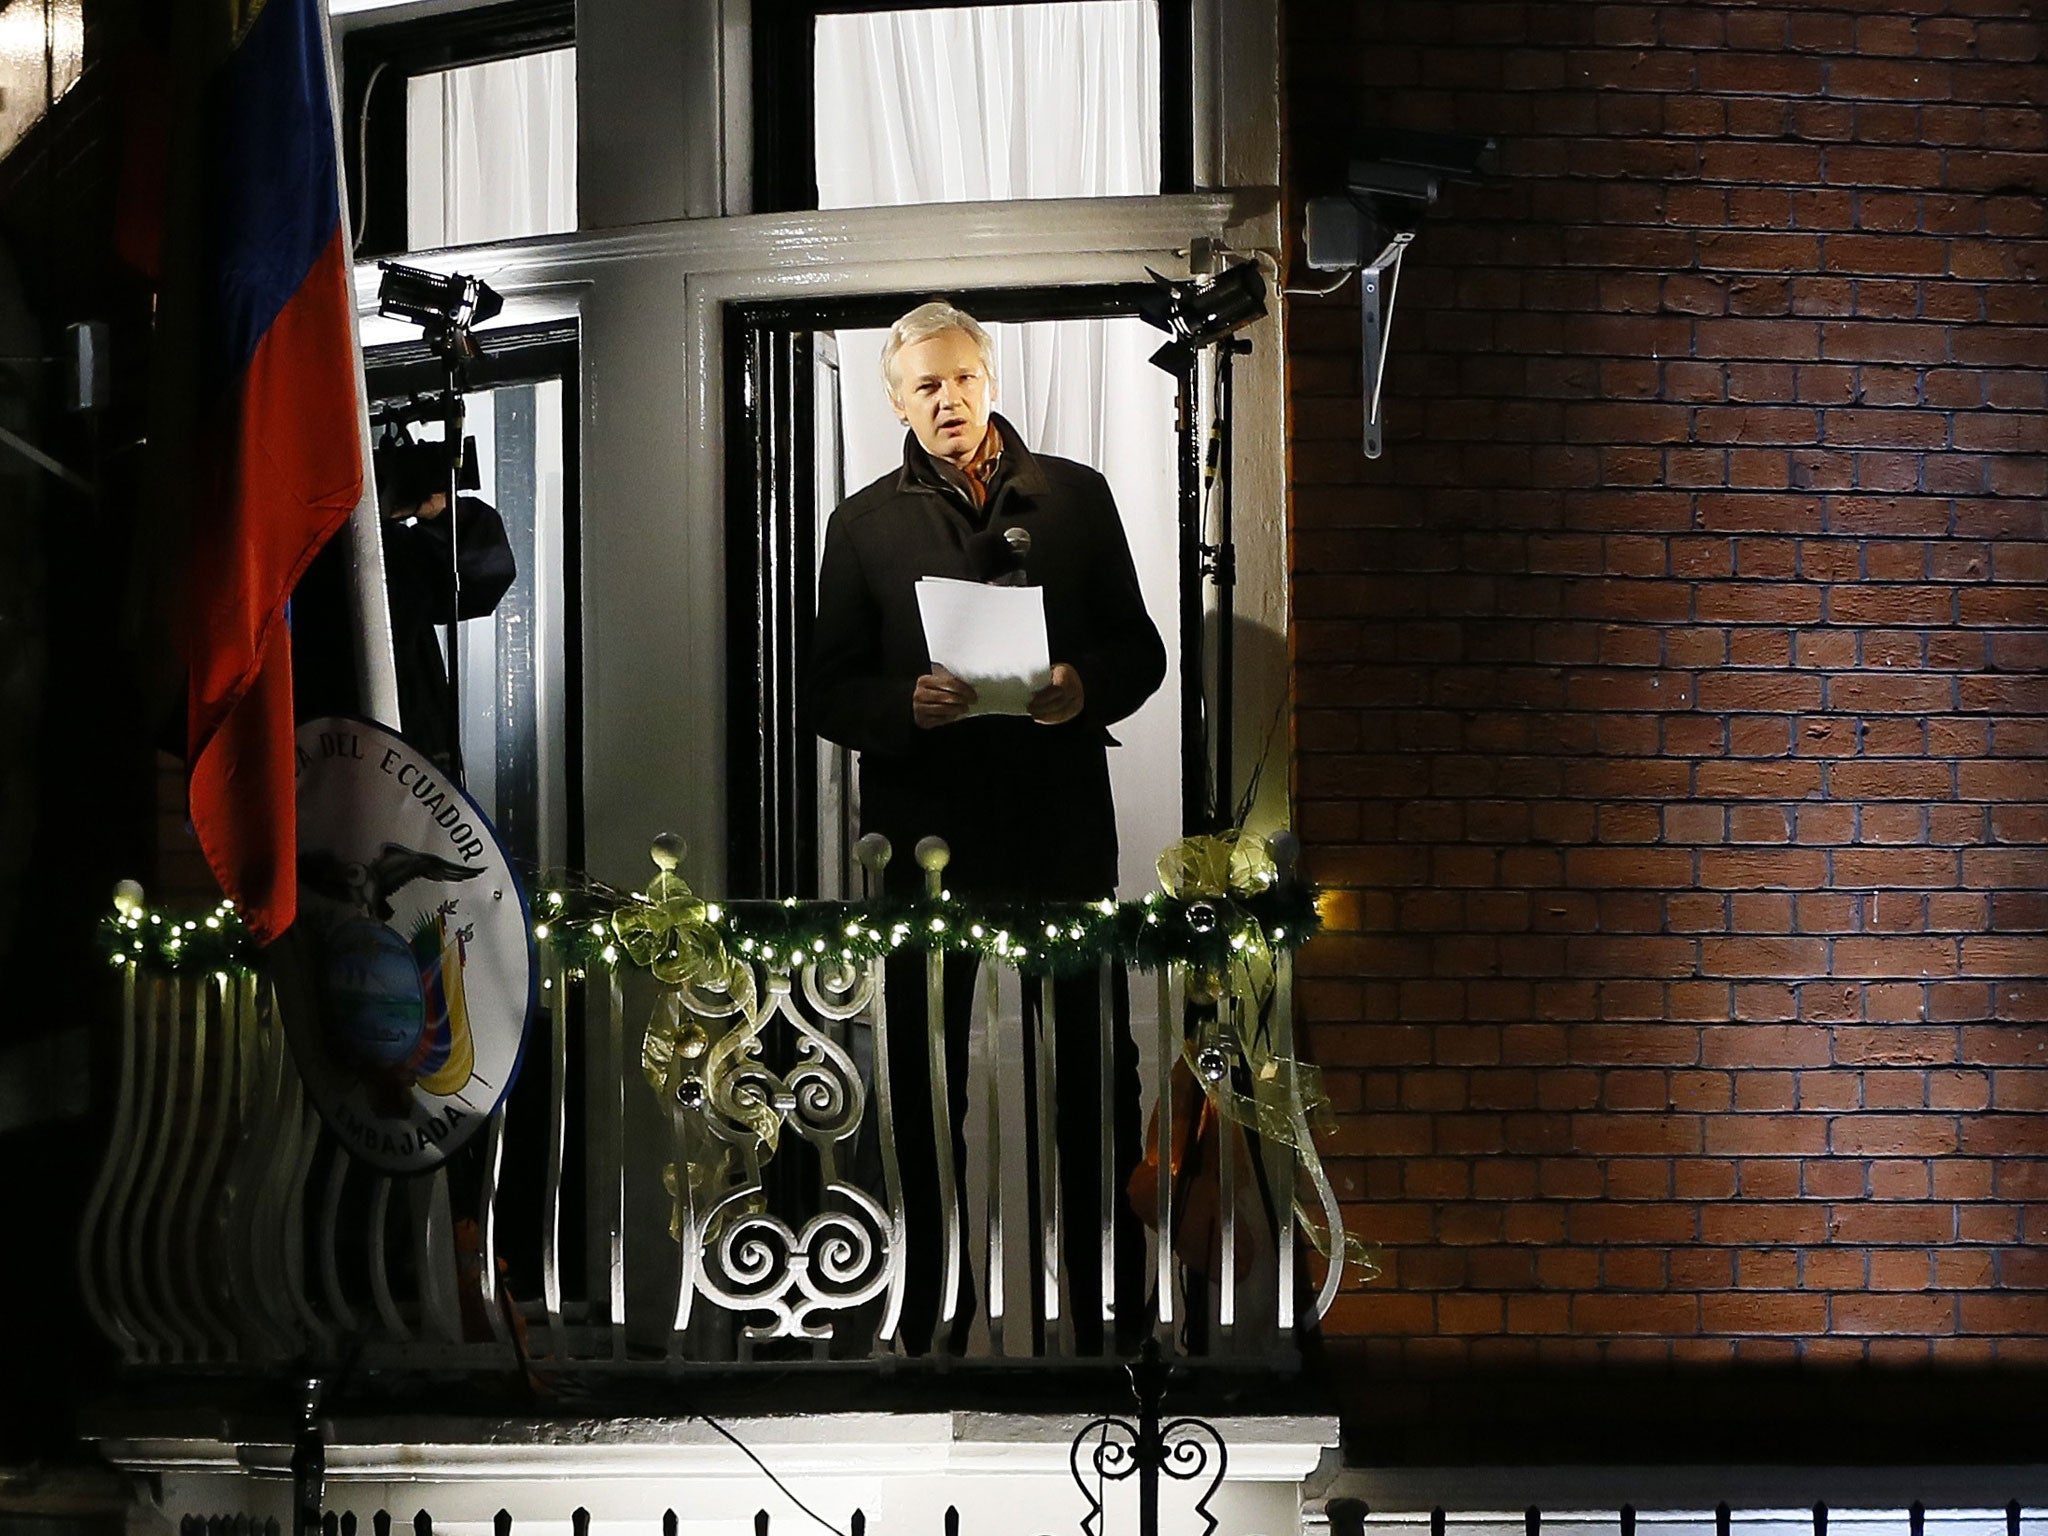 Julian Assange at the embassy last night